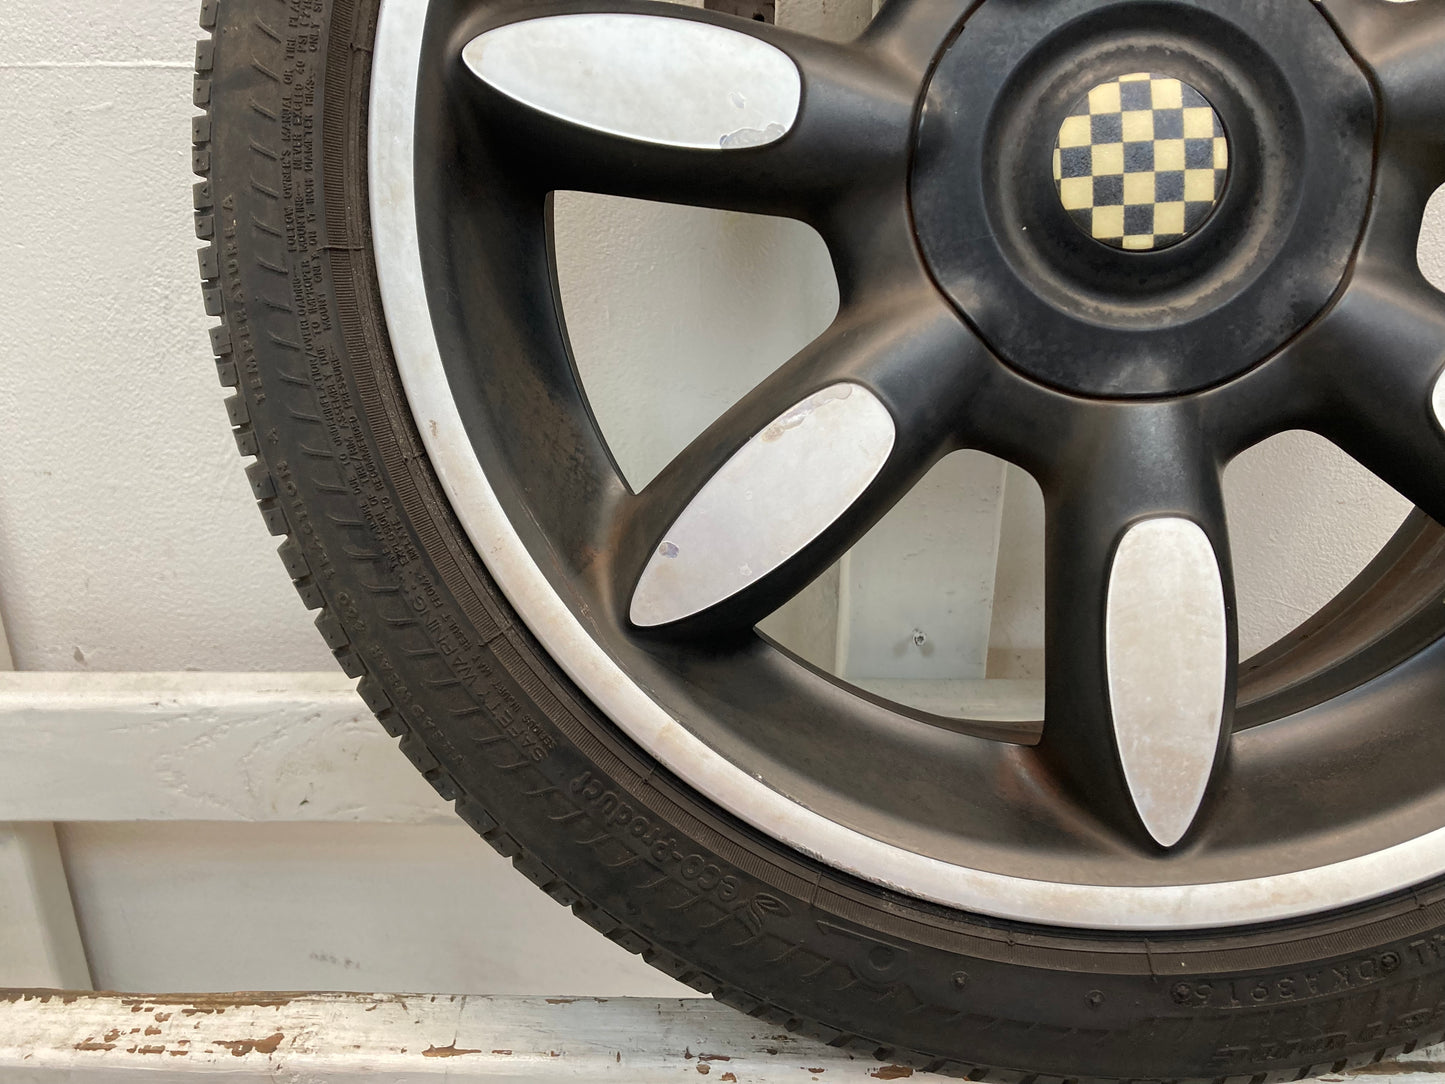 Mini Cooper S Sidewalk Edition Wheel Set 36116773800 02-15 409